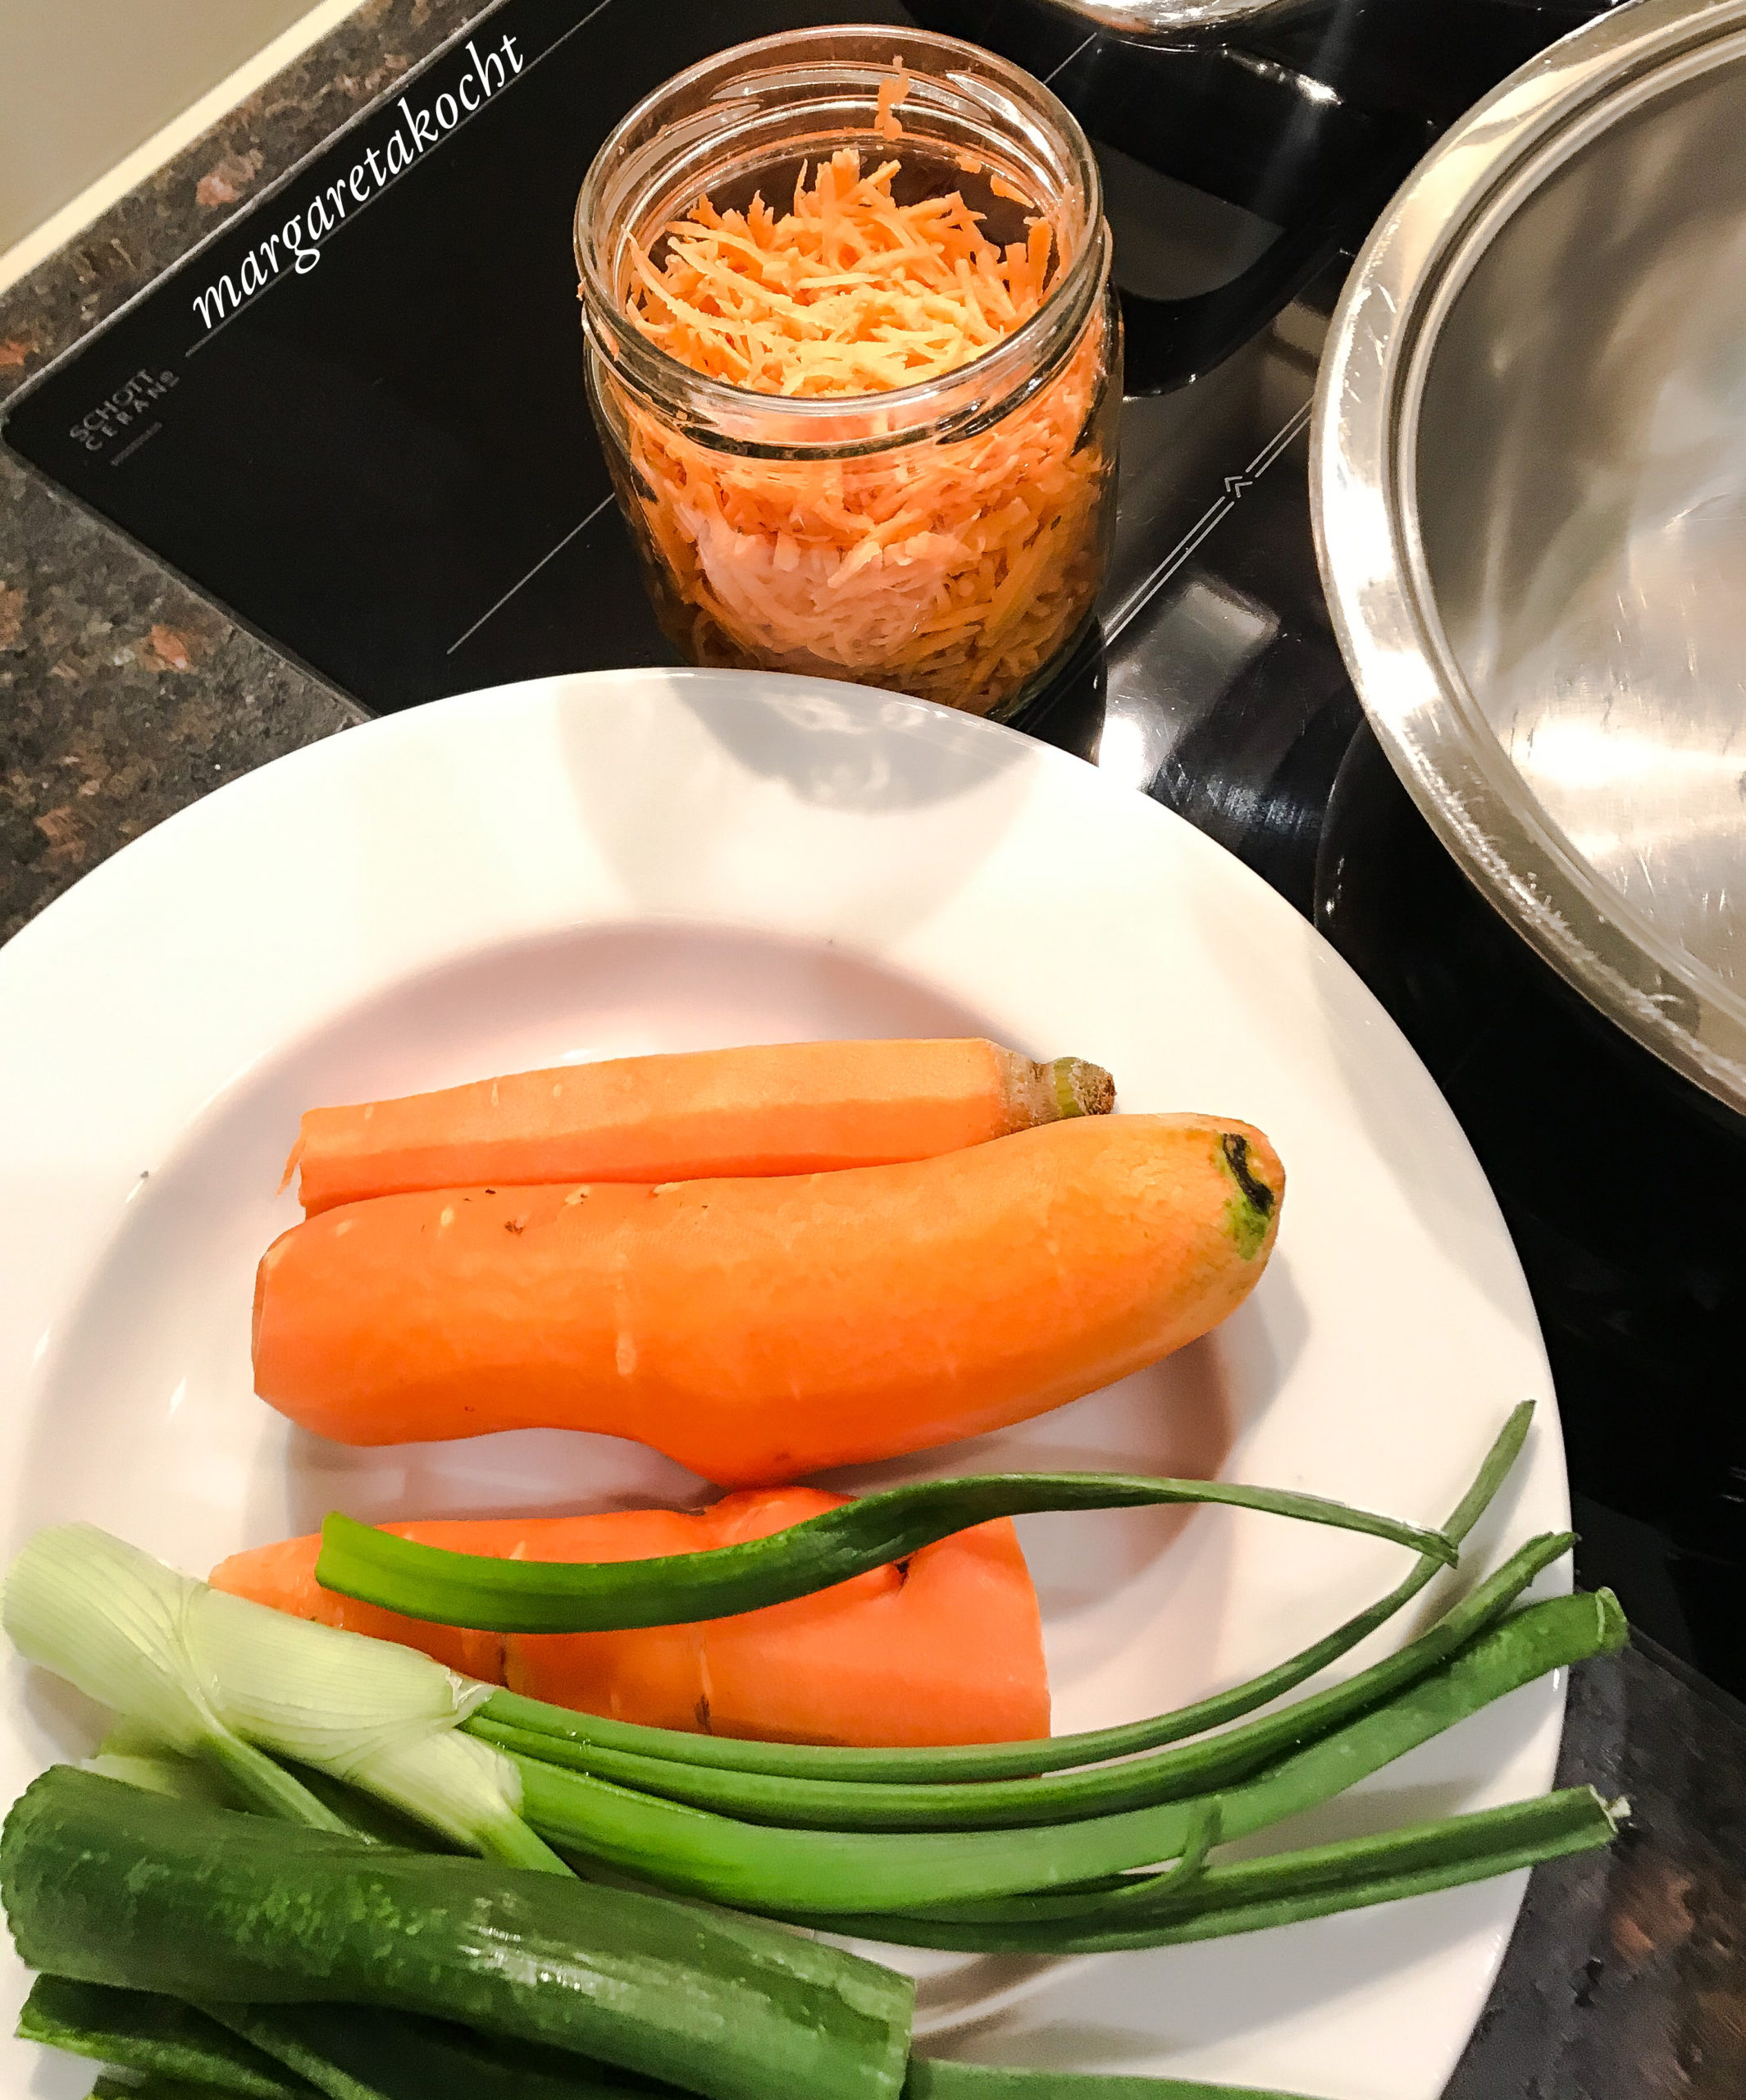 Karotten Süßkartoffel Suppe